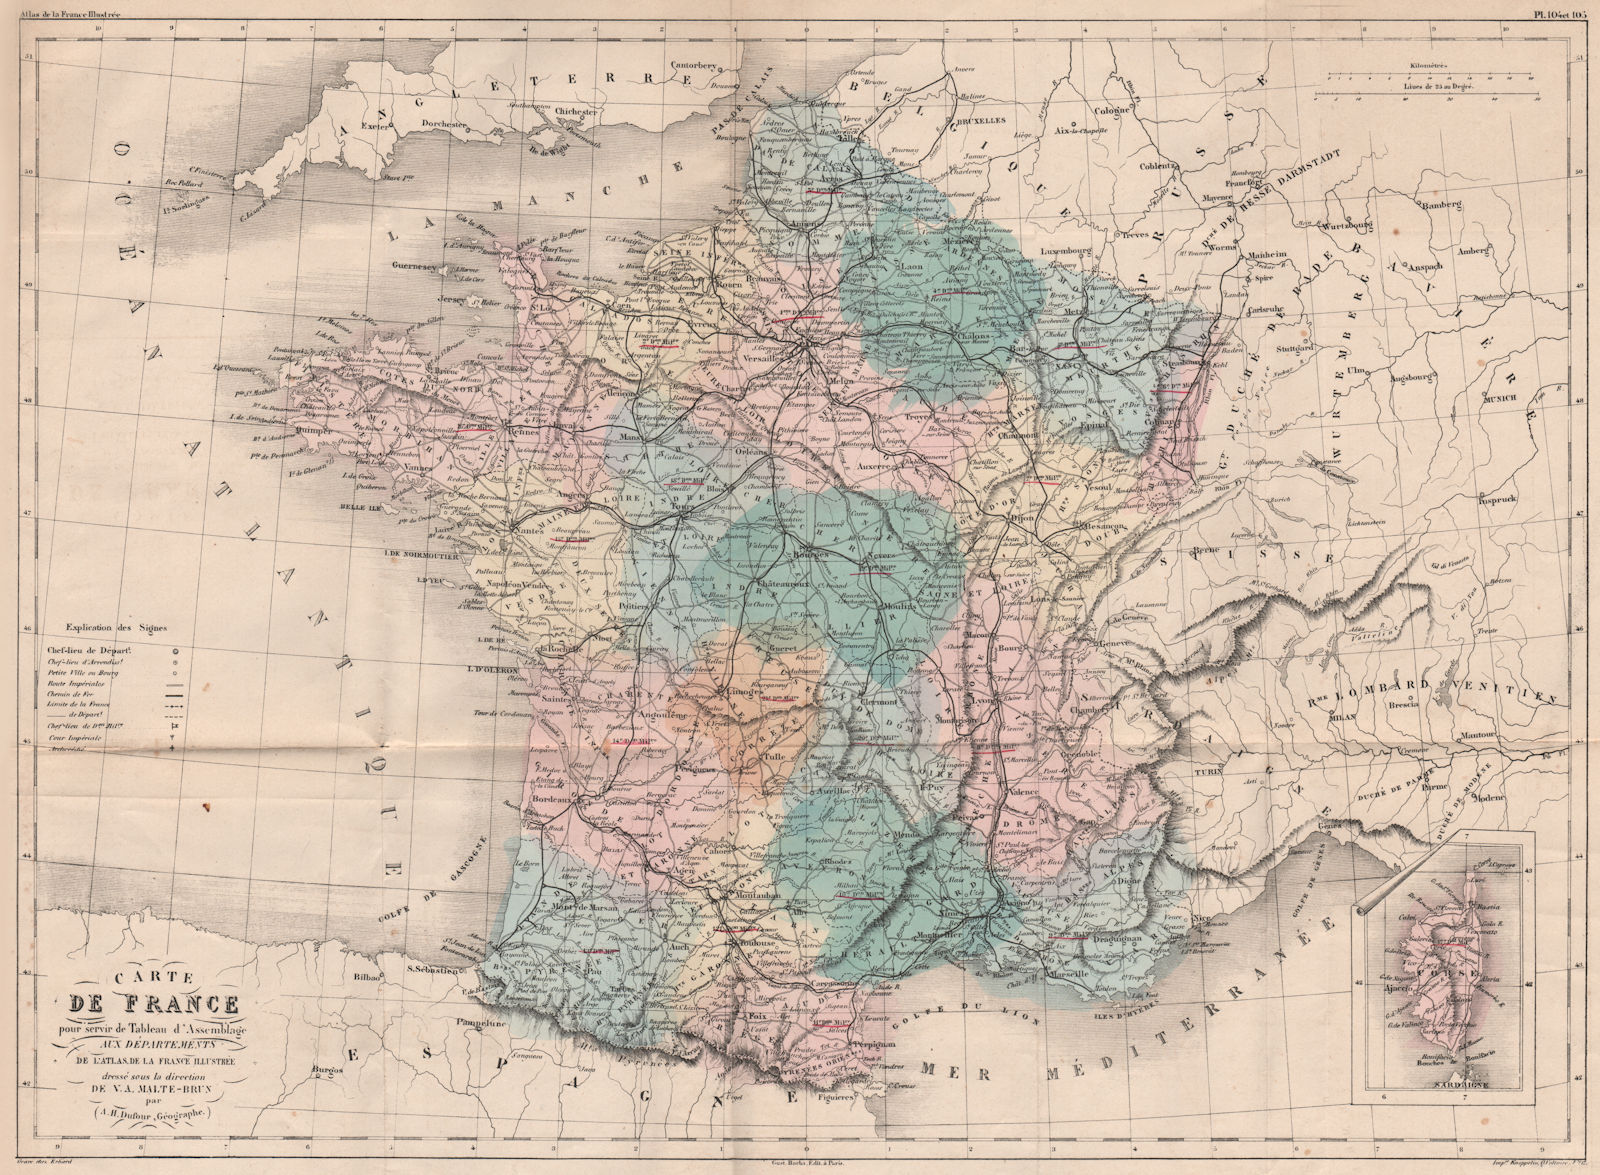 FRANCE. Carte de France. LARGE GRANDE. Regions departements.MALTE-BRUN 1852 map